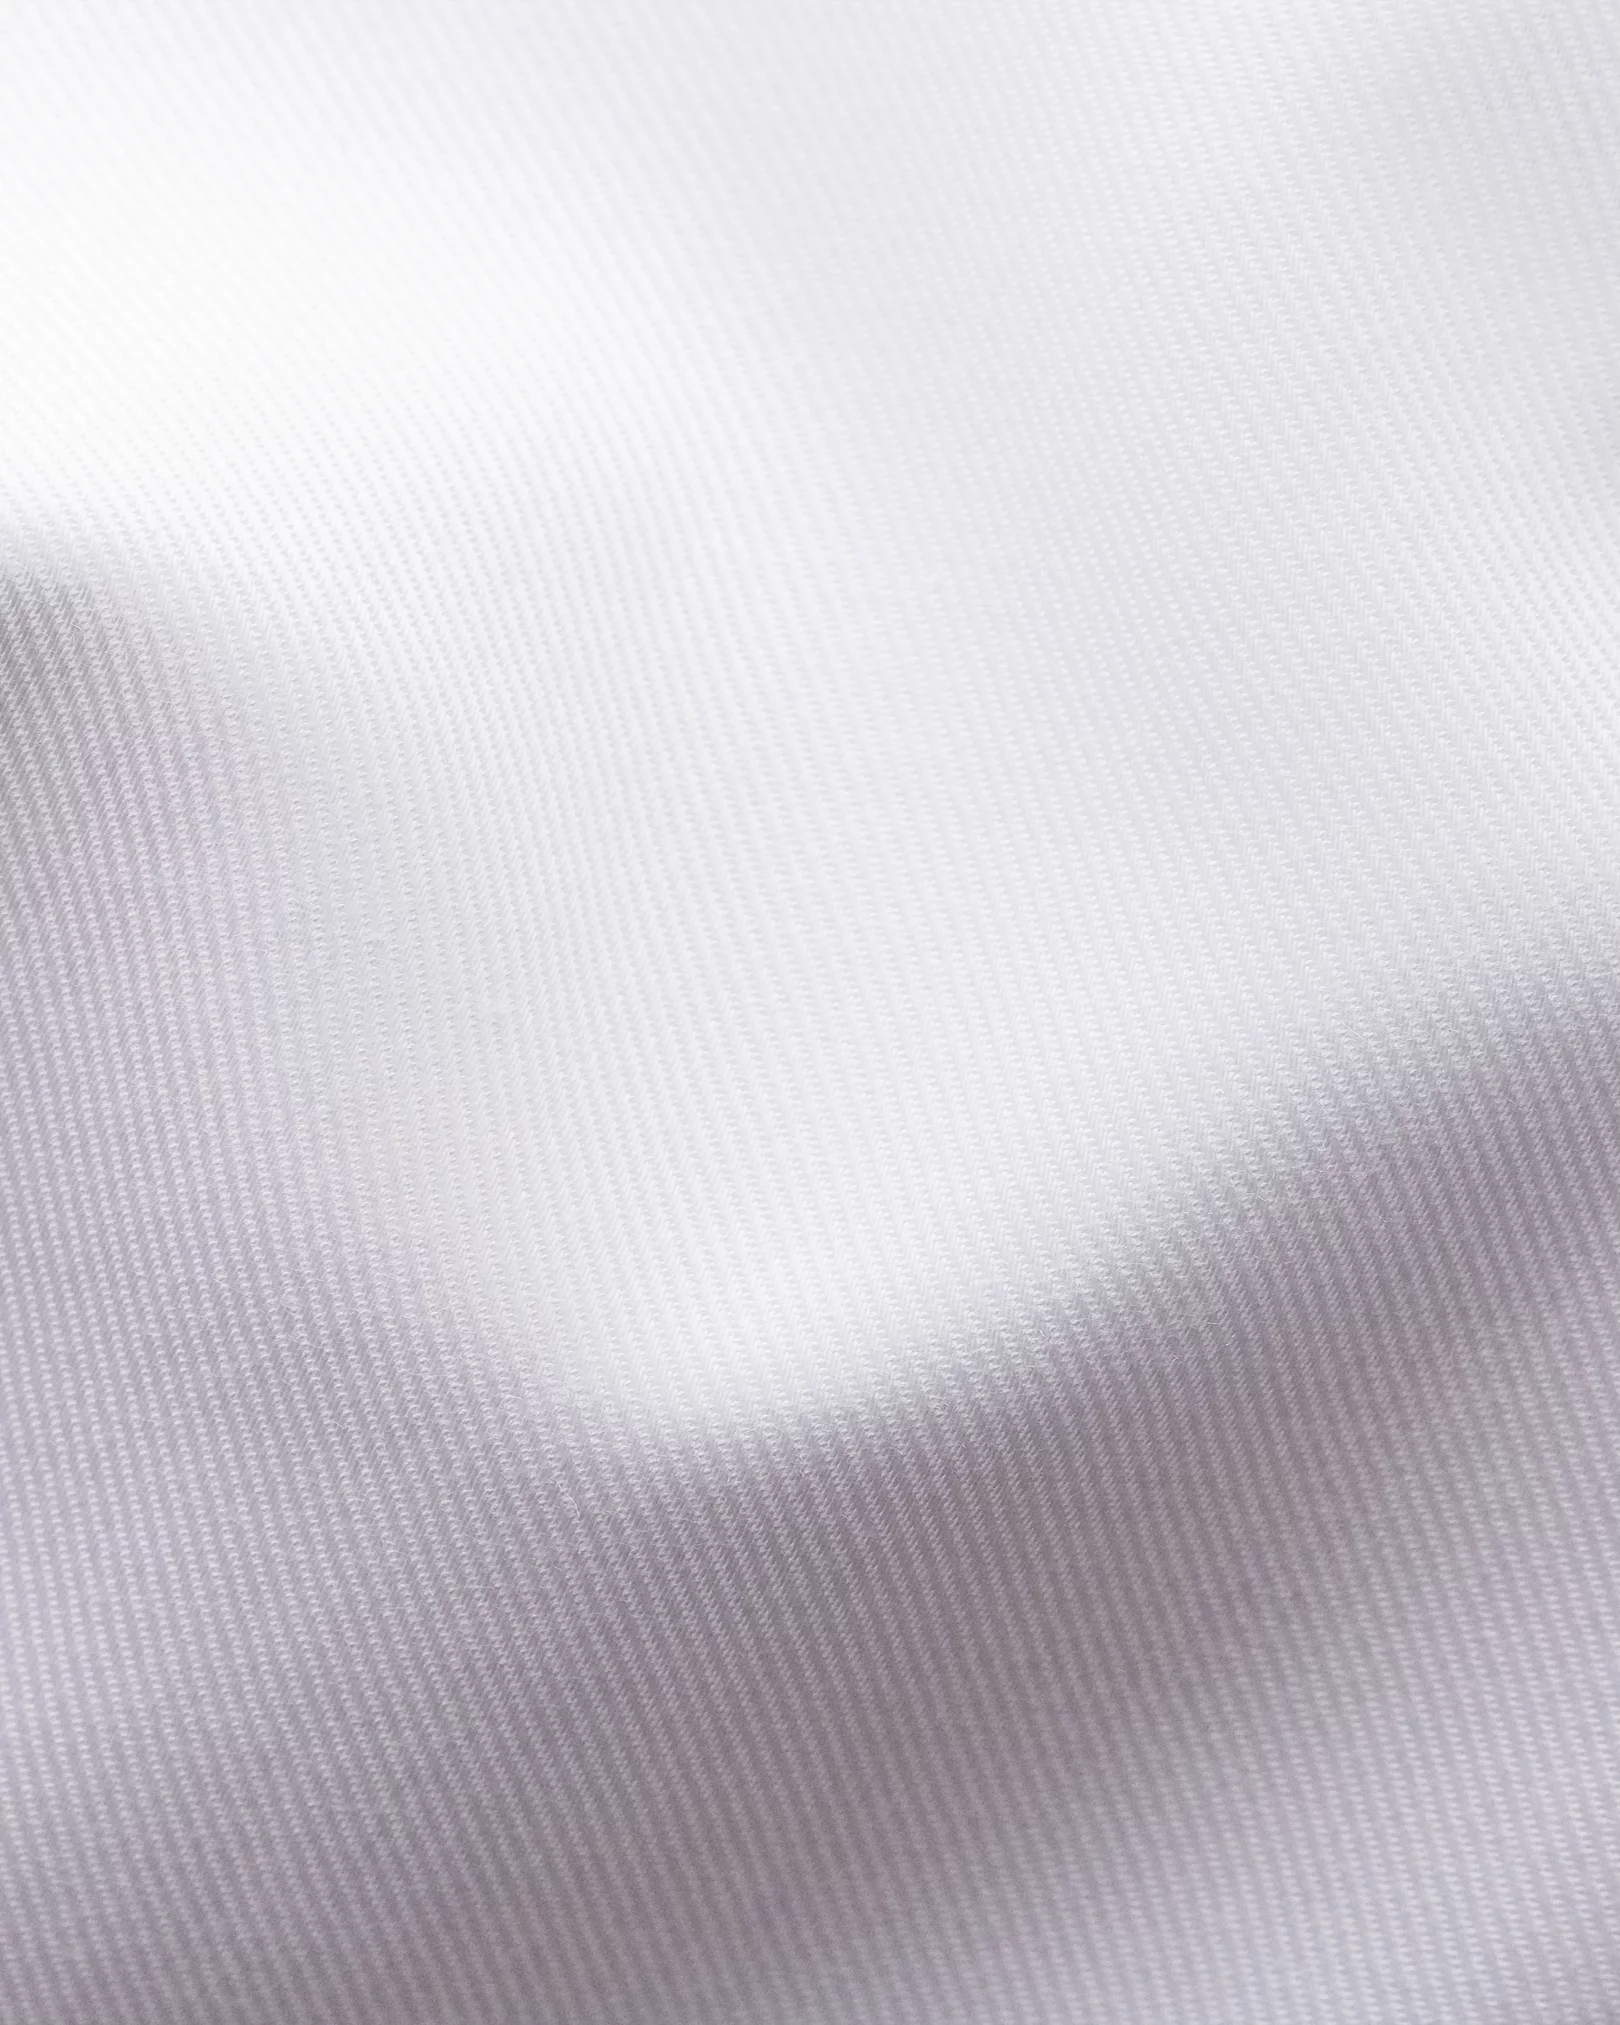 Eton - white twill stretch shirt extreme cut away